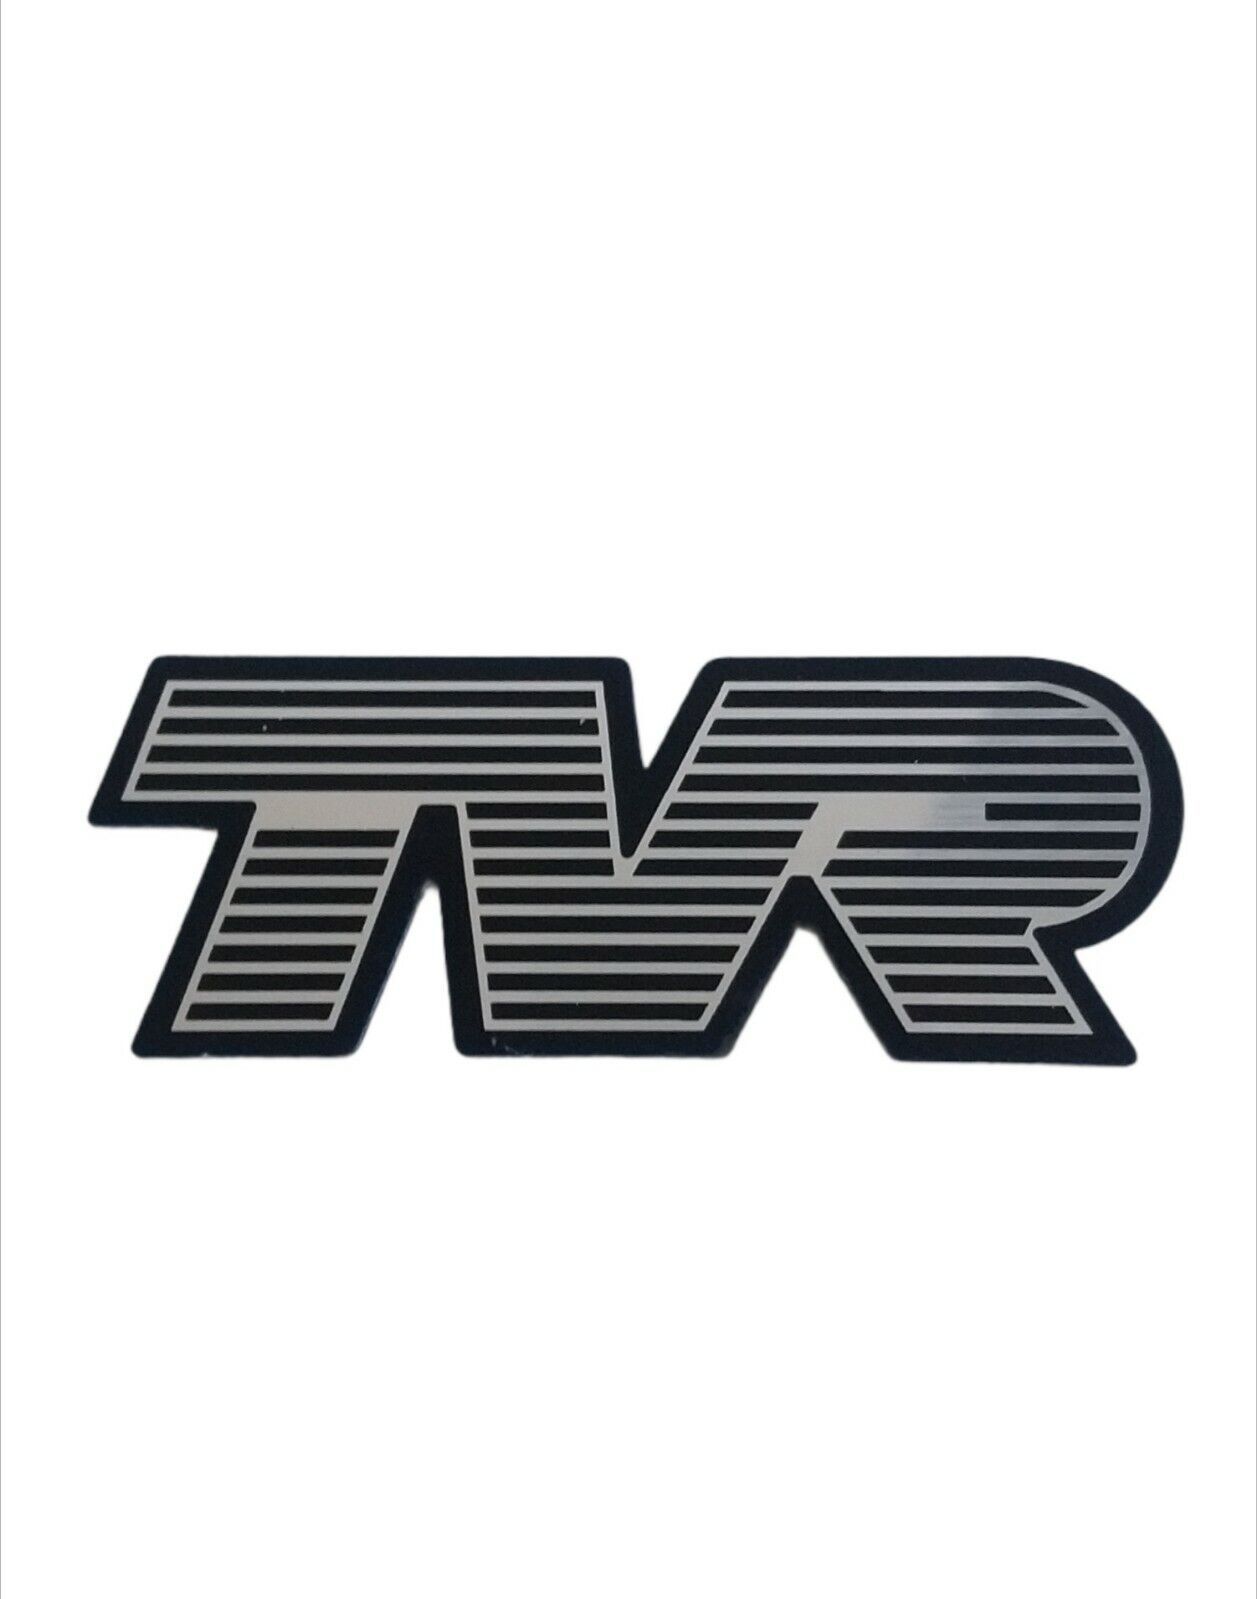 TVR  badge Bonnet Chimaera Griffith, wedge Sagaris garage or toolbox mancave